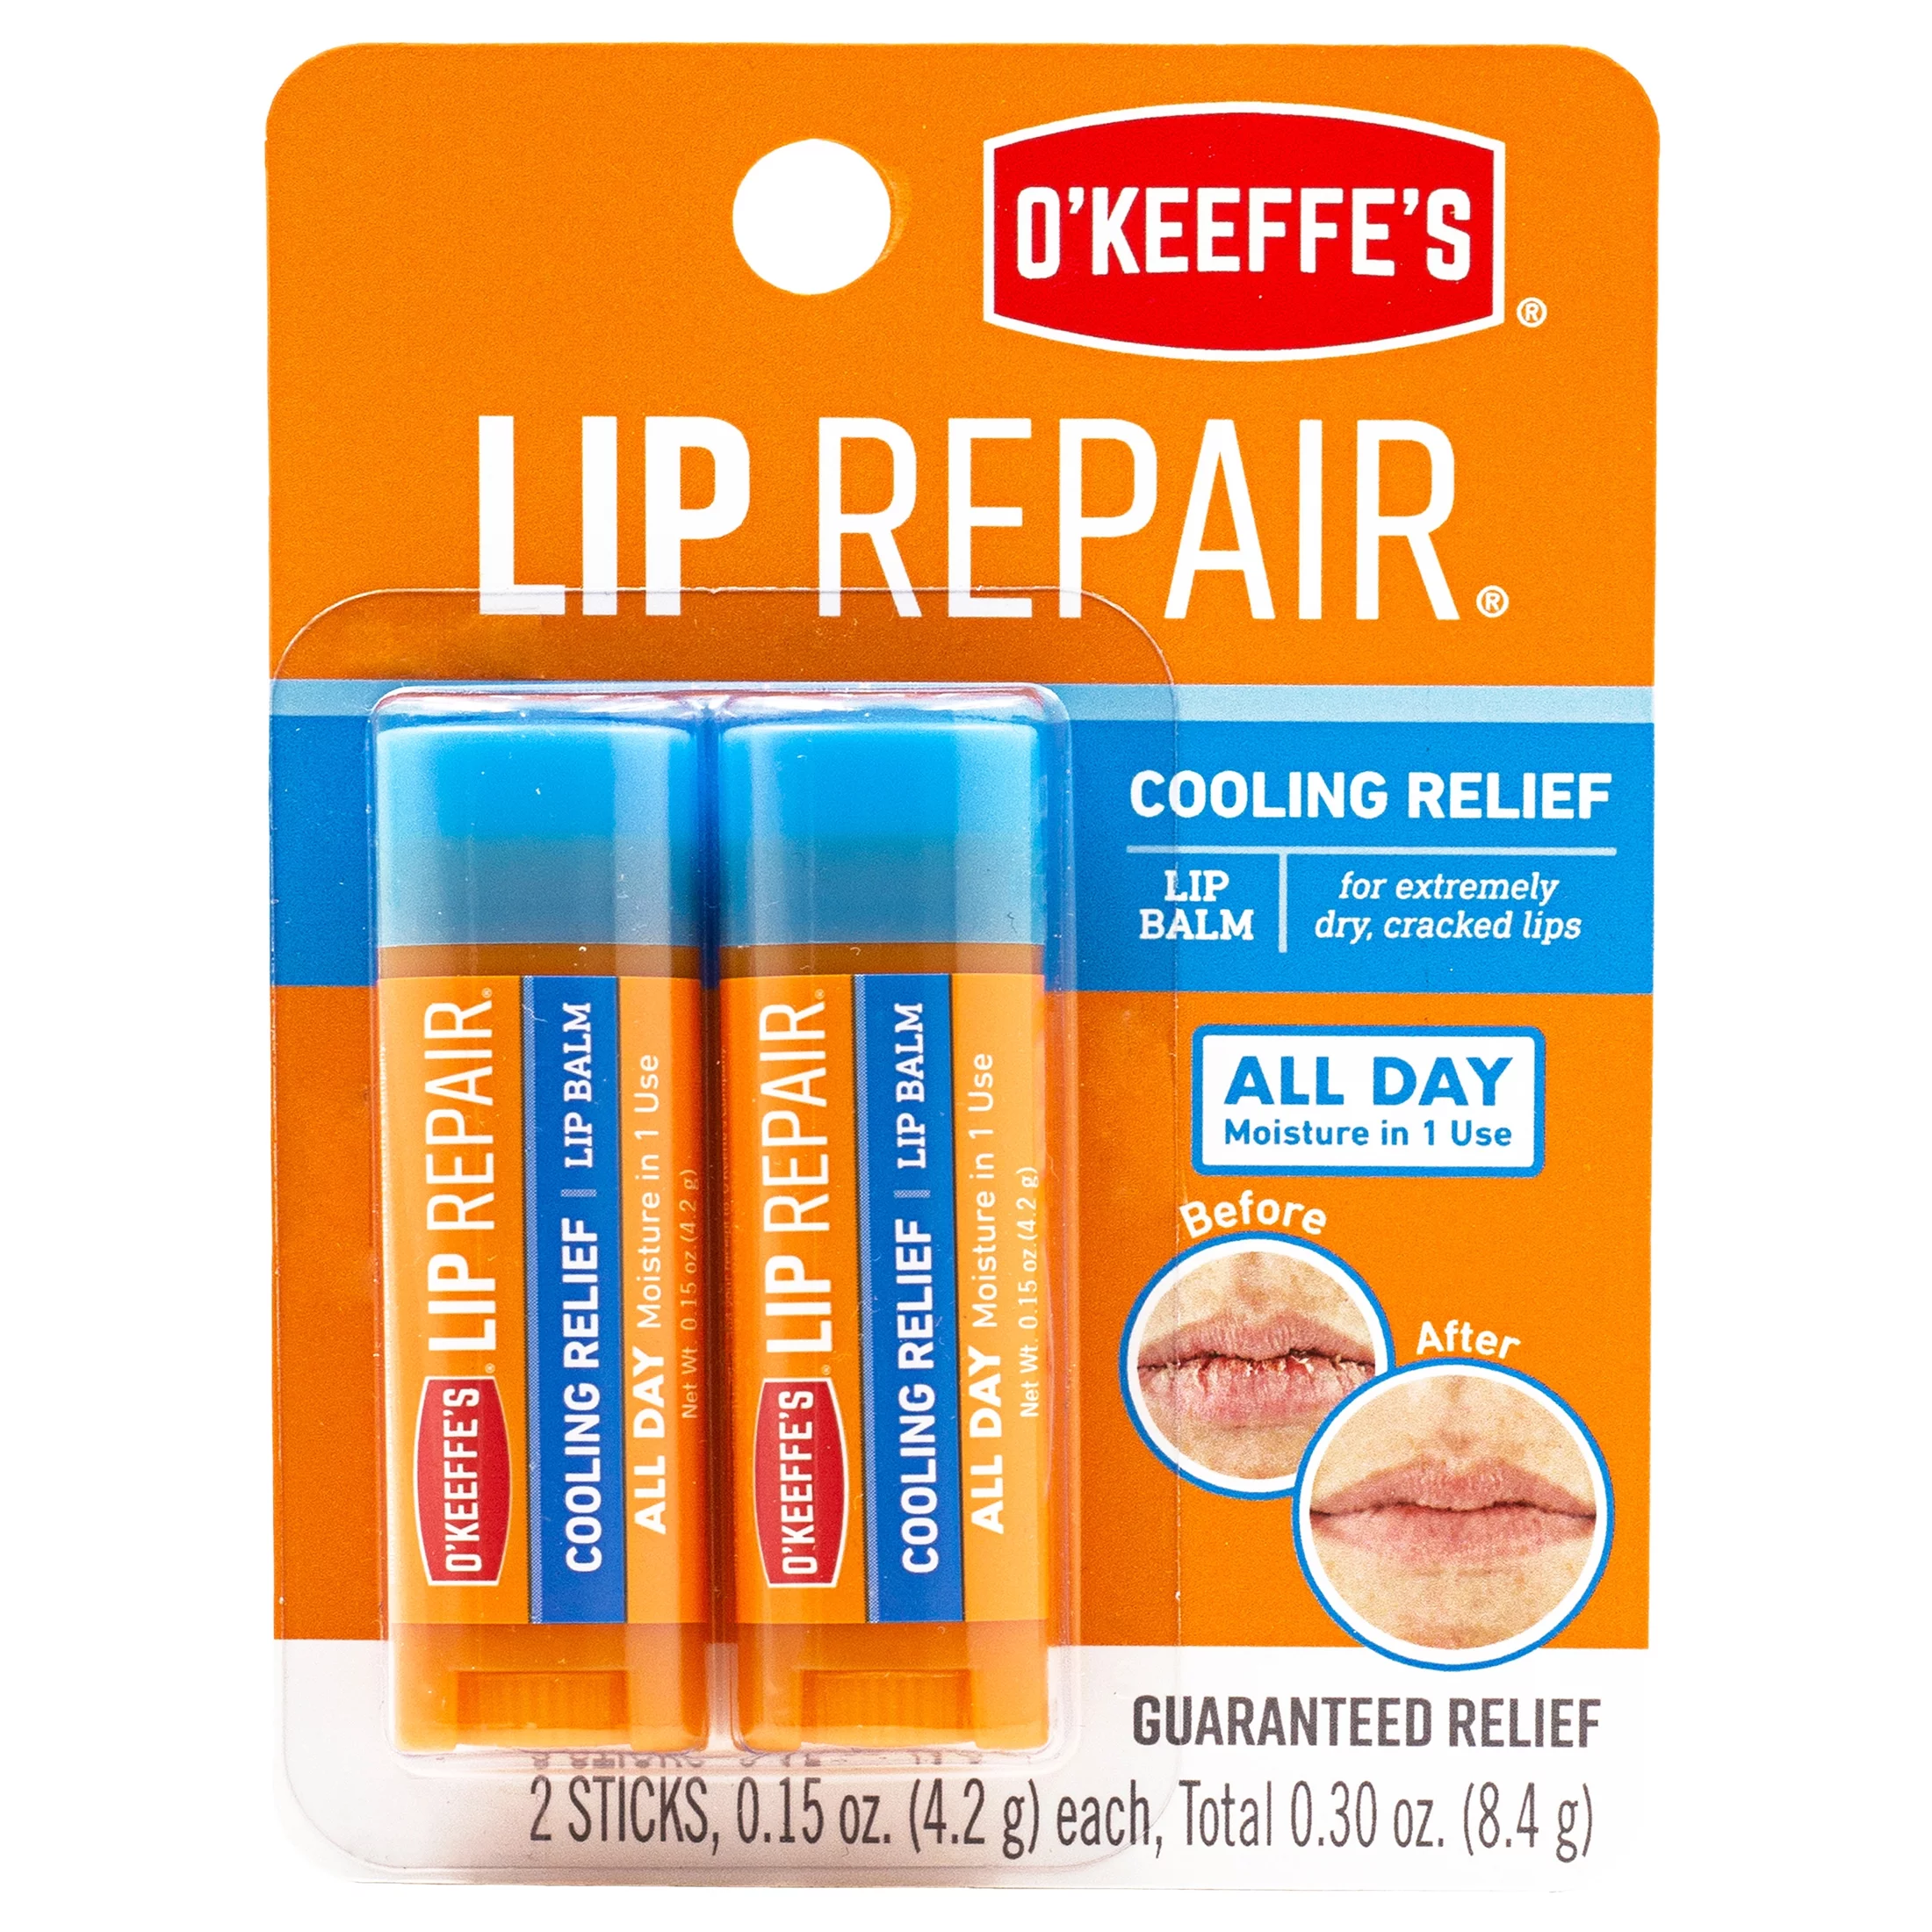 O'Keeffe's Lip Repair Cooling Moisturizing, Long-Lasting Matte Lip Balm, Clear, 0.15oz each, Twin Pack